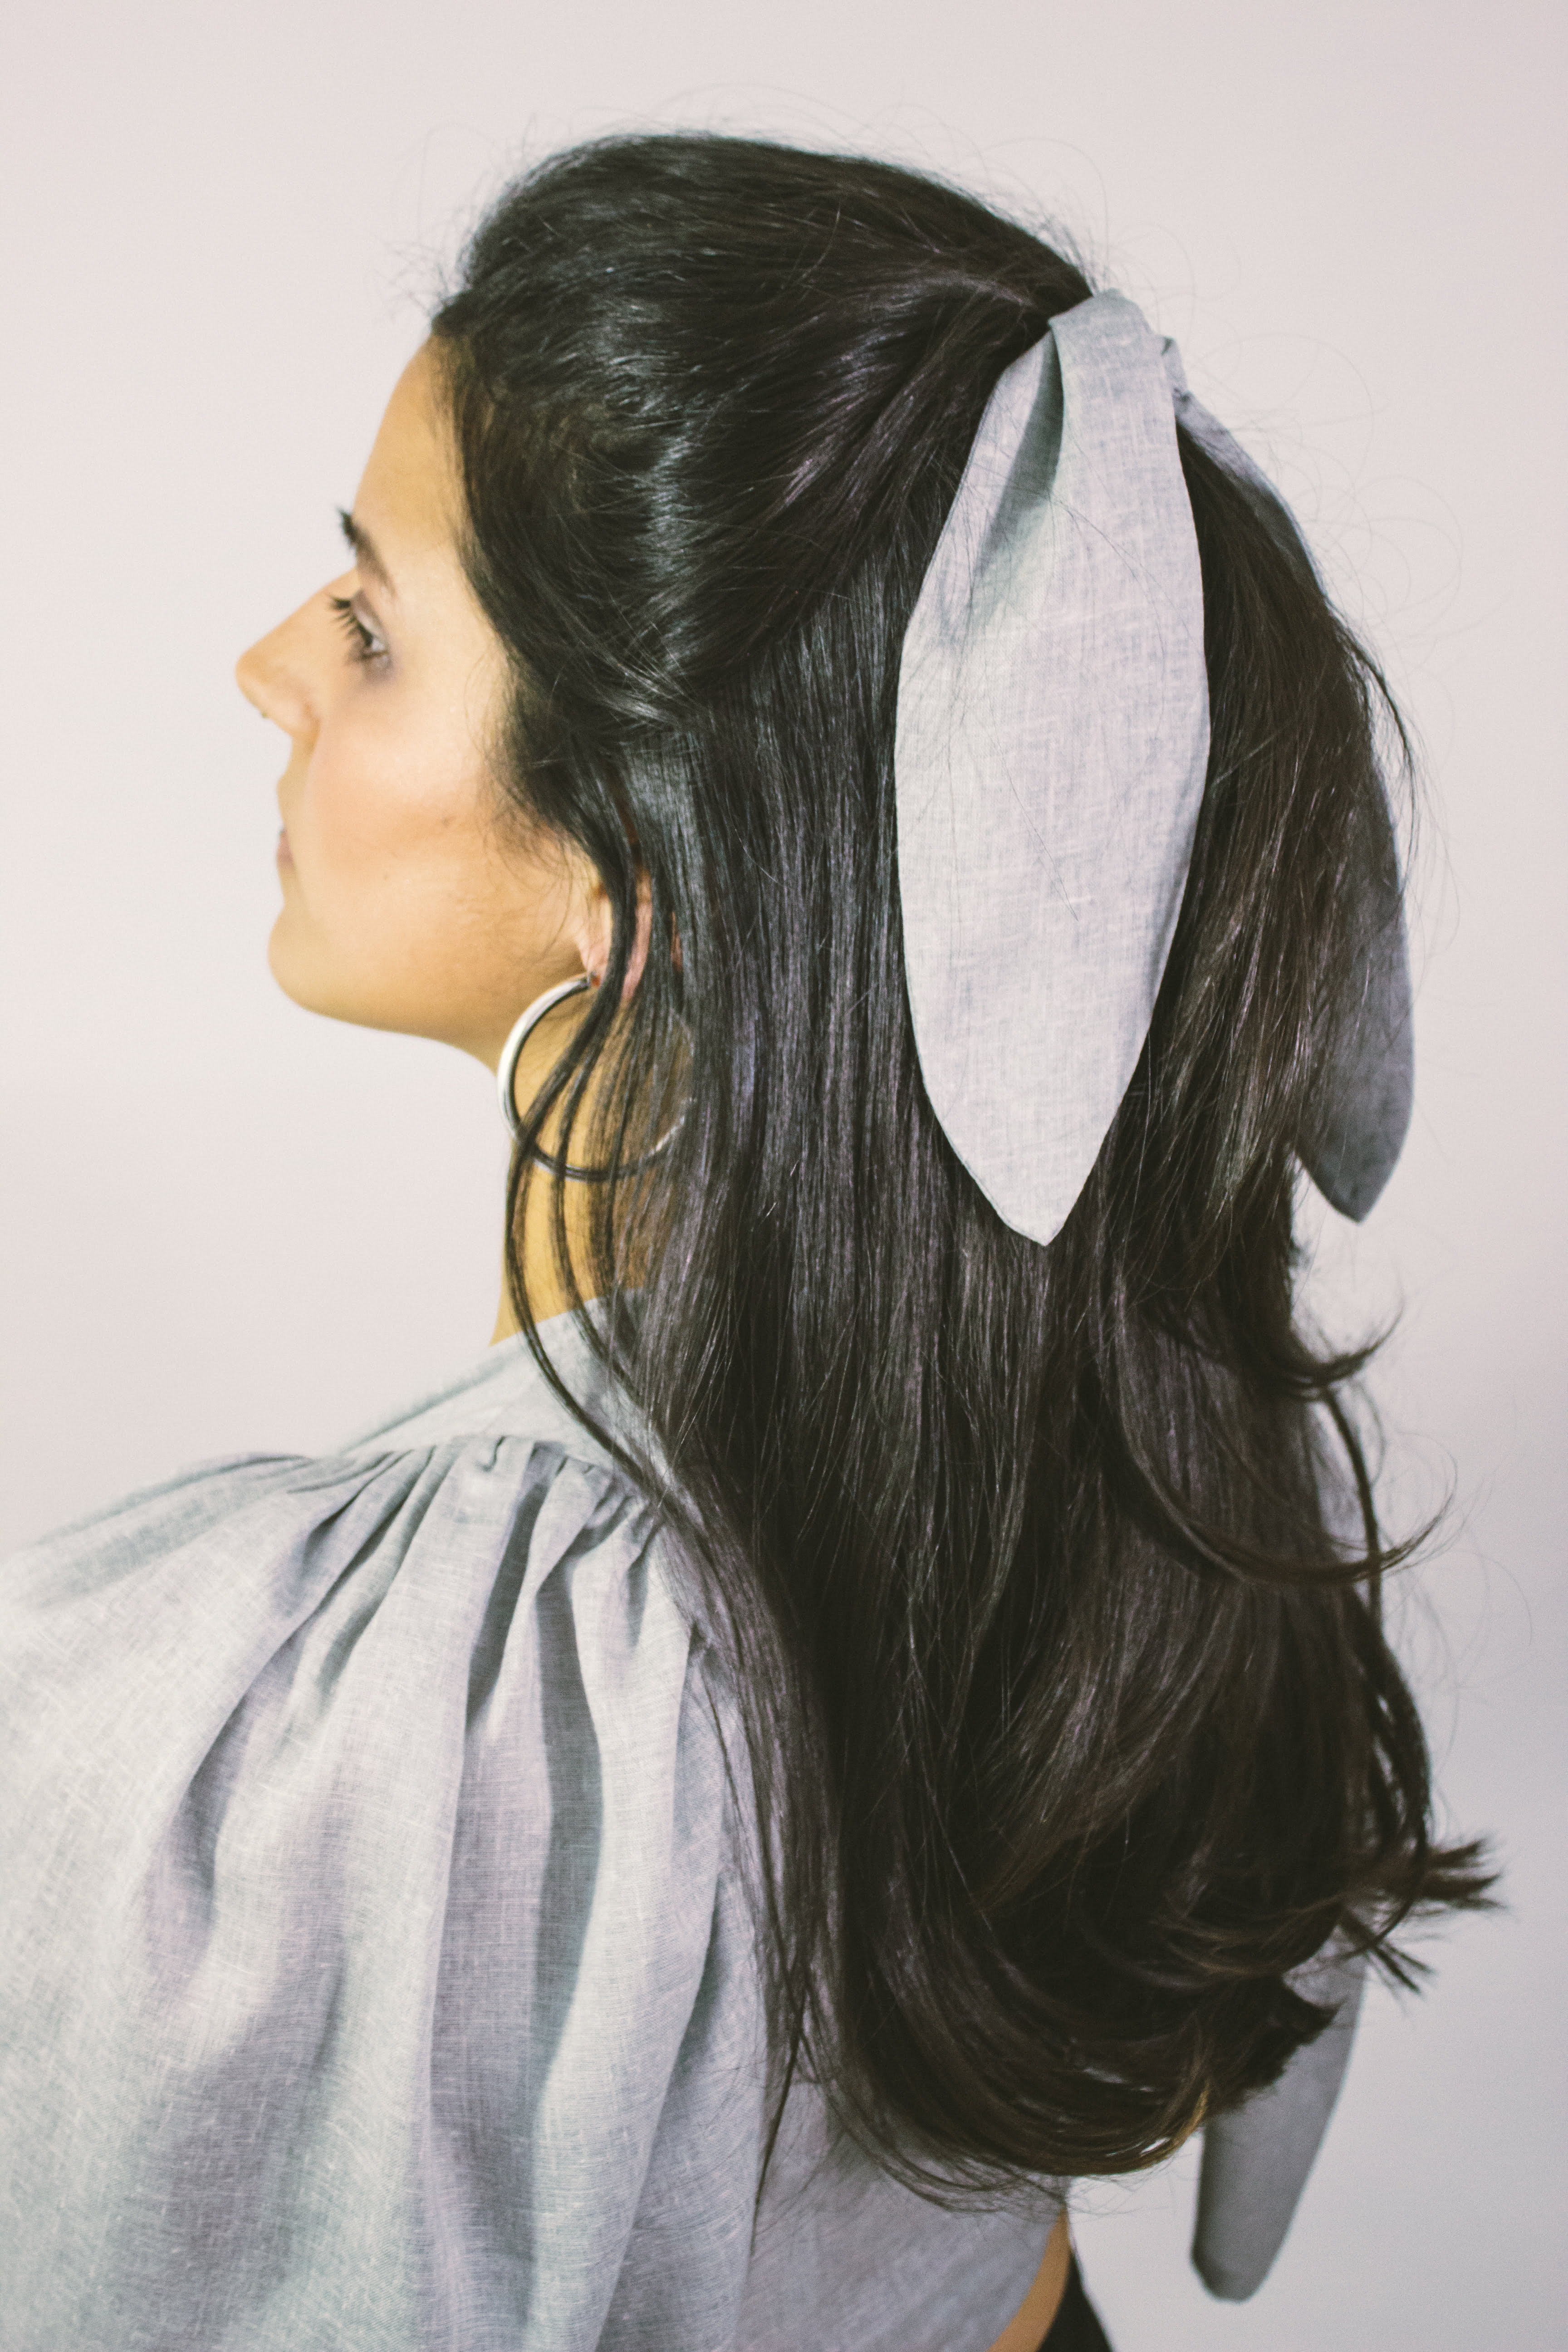 Woman wearing grey hair band